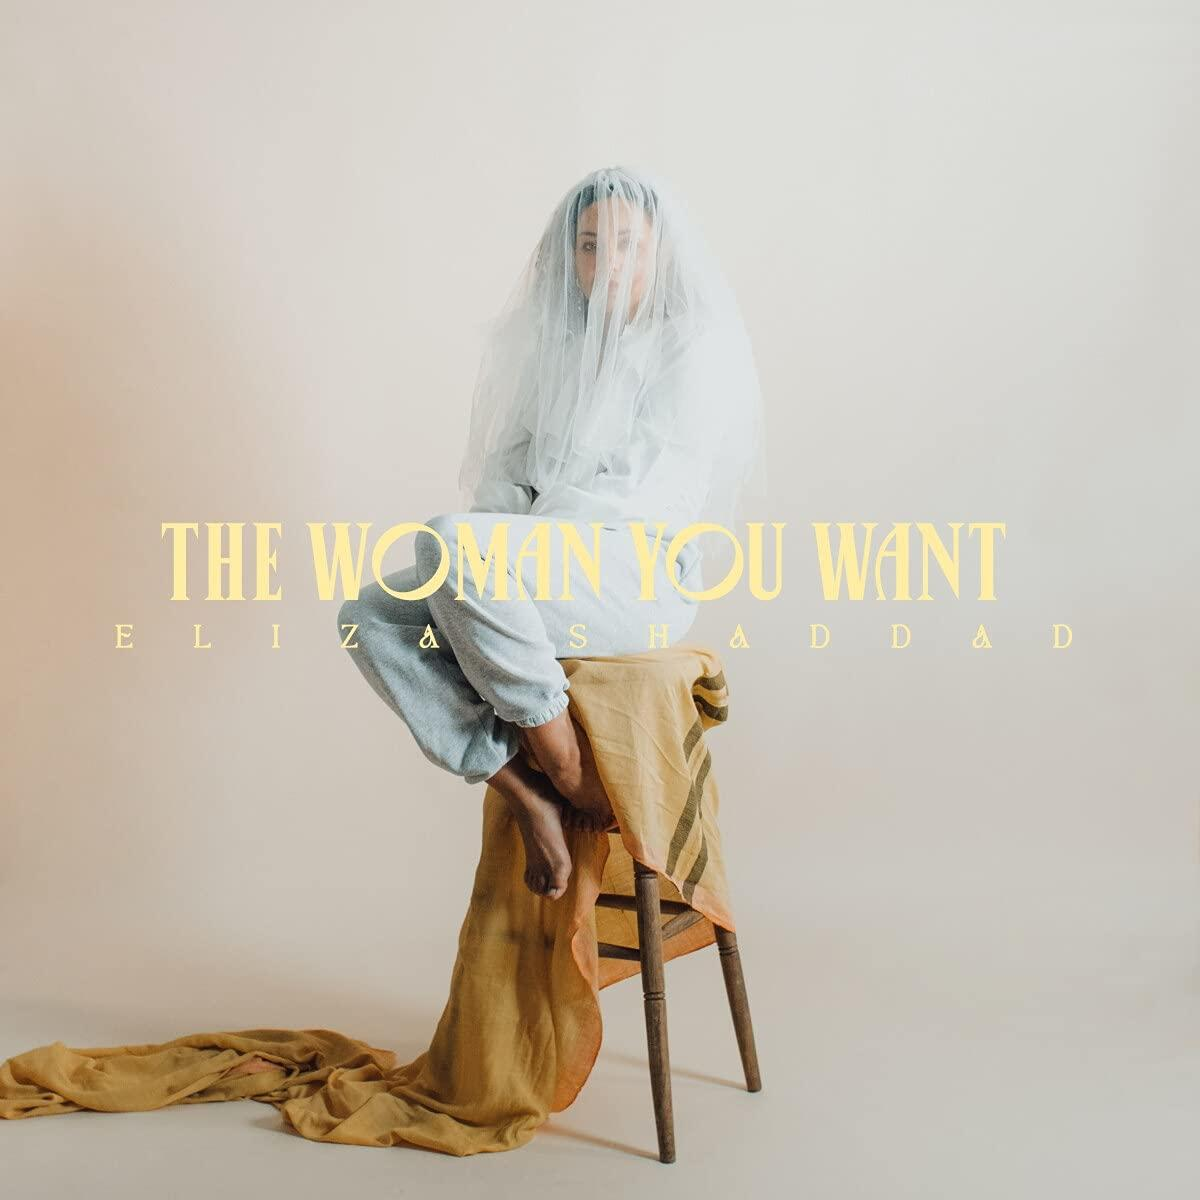 The Eliza Woman - Shaddad Want - You (Vinyl)